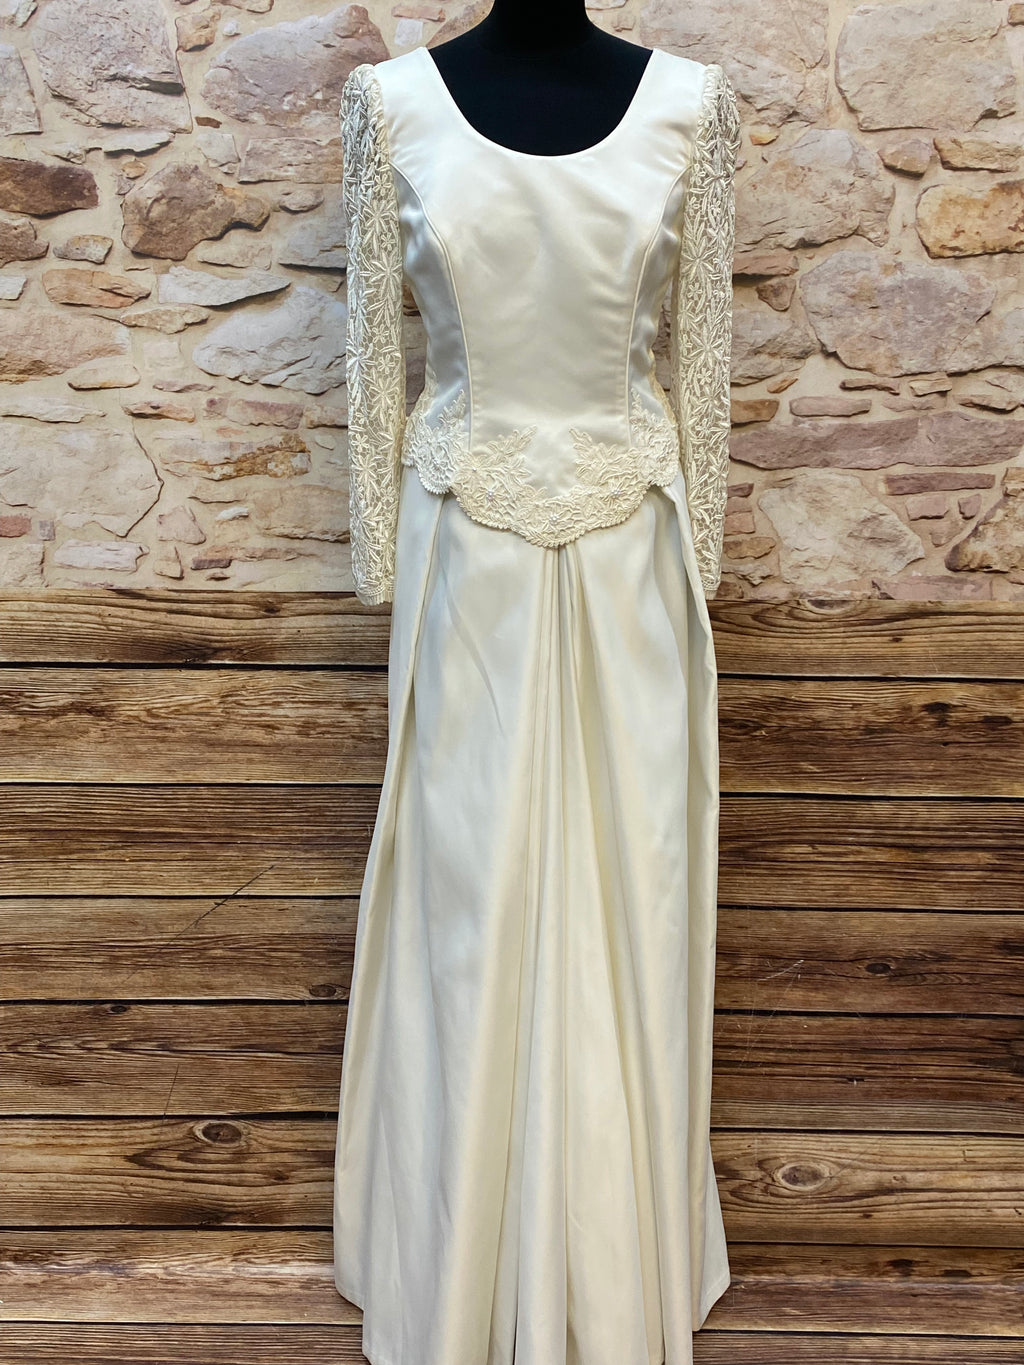 Langes Brautkleid Hochzeitskleid Gr.42 Vintage langer Arm